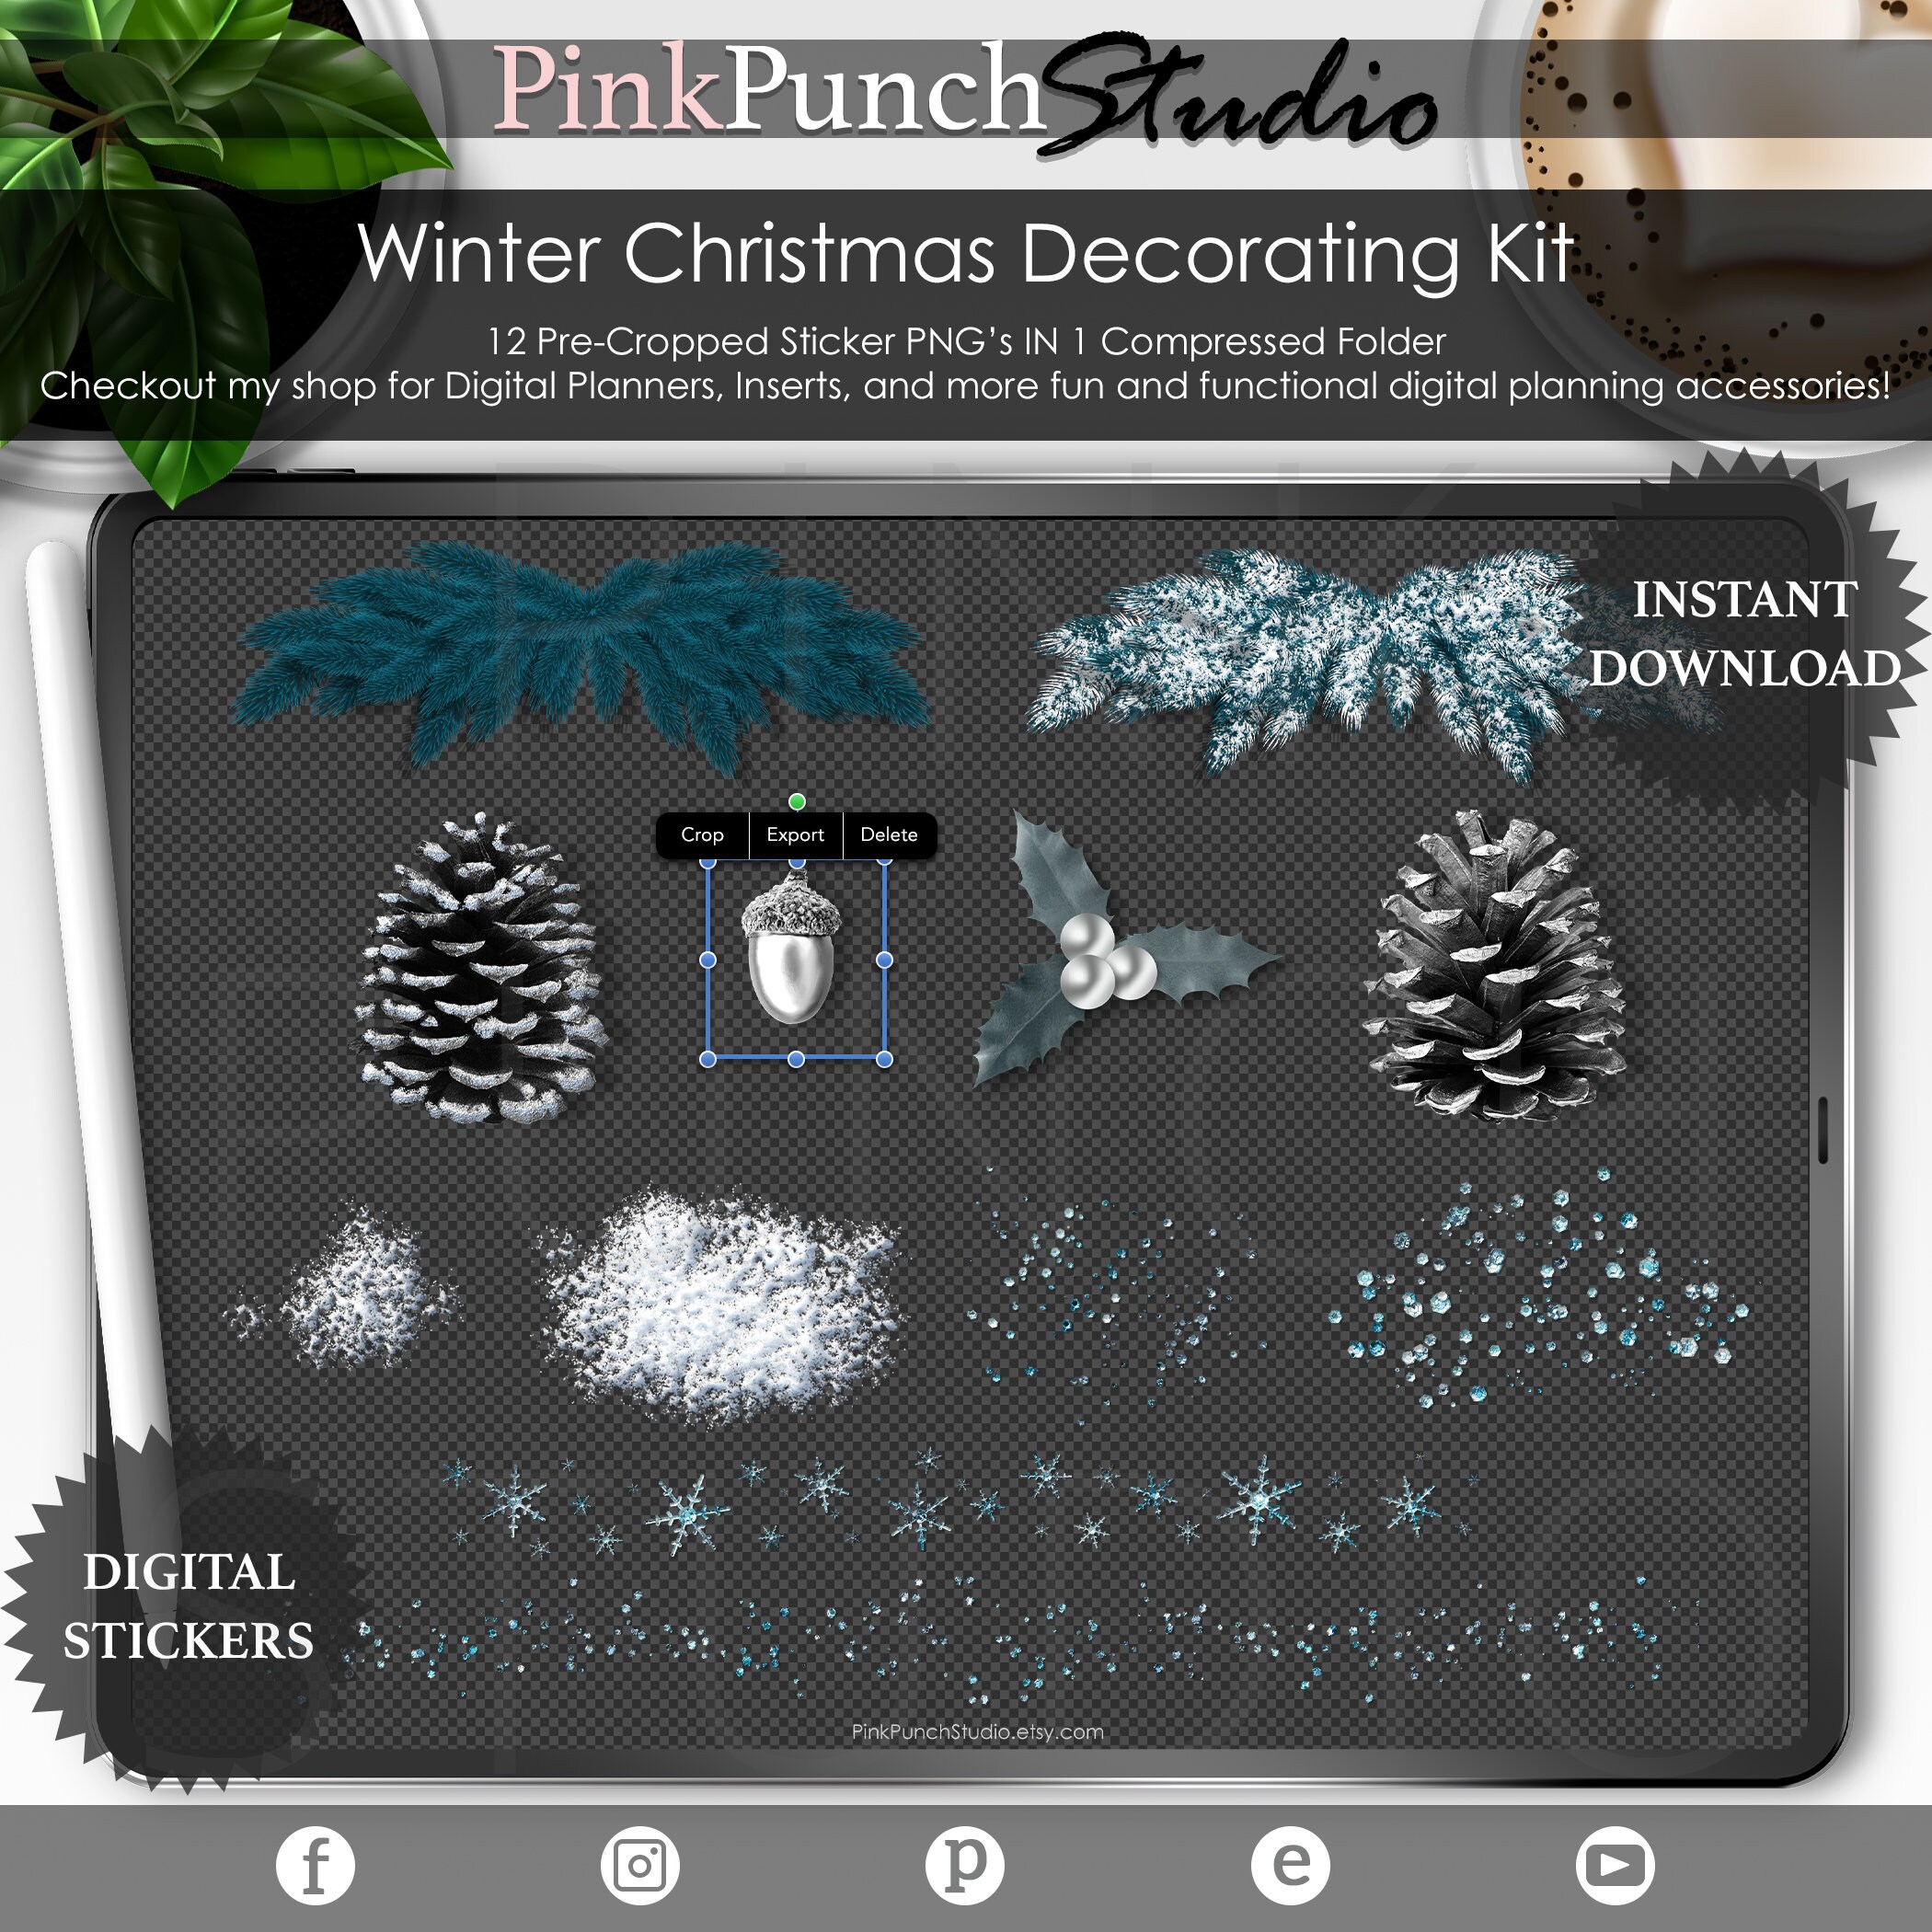 Cool Winter Decor Kit PNG Sticker Set Digital Planner Planning ...